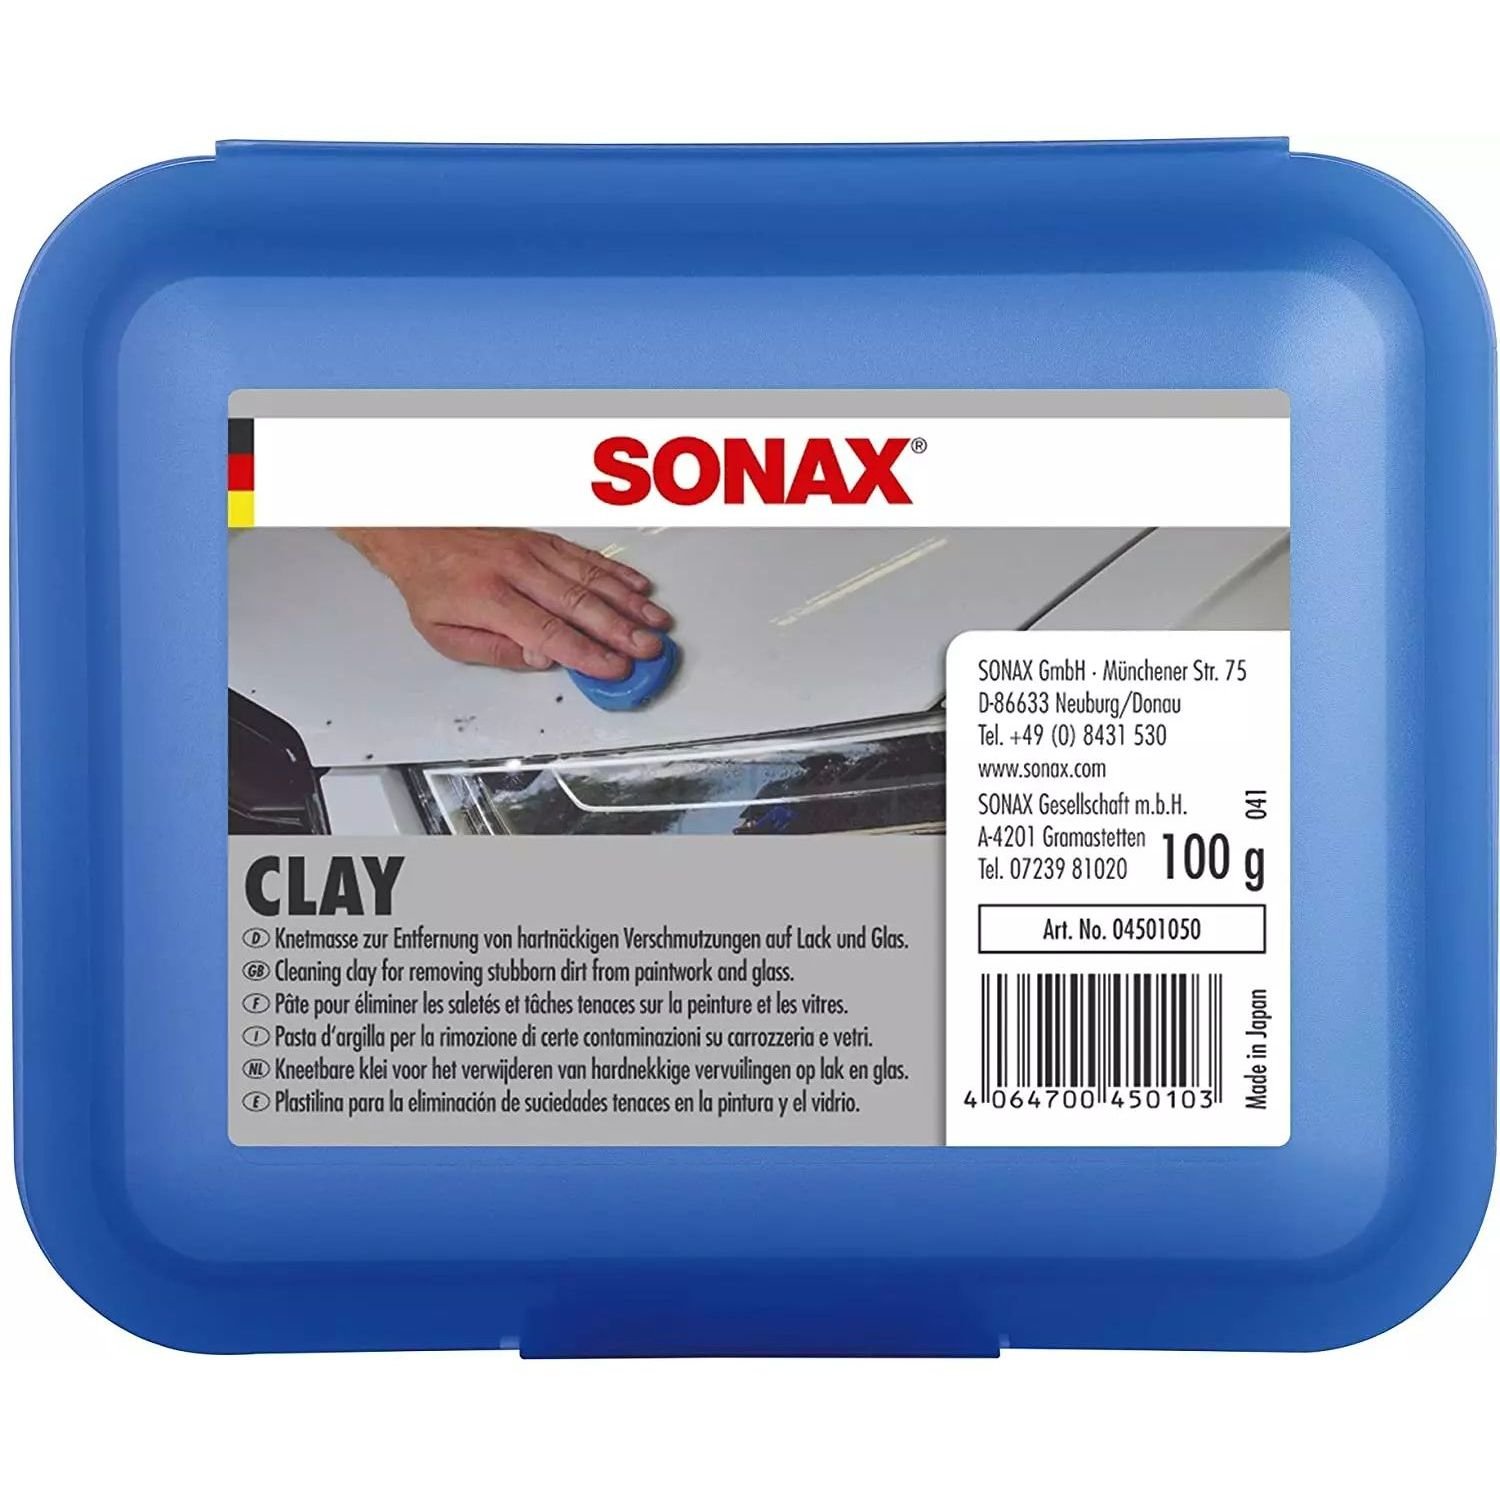 Очищающая маска Sonax, синяя, 100 г - фото 1